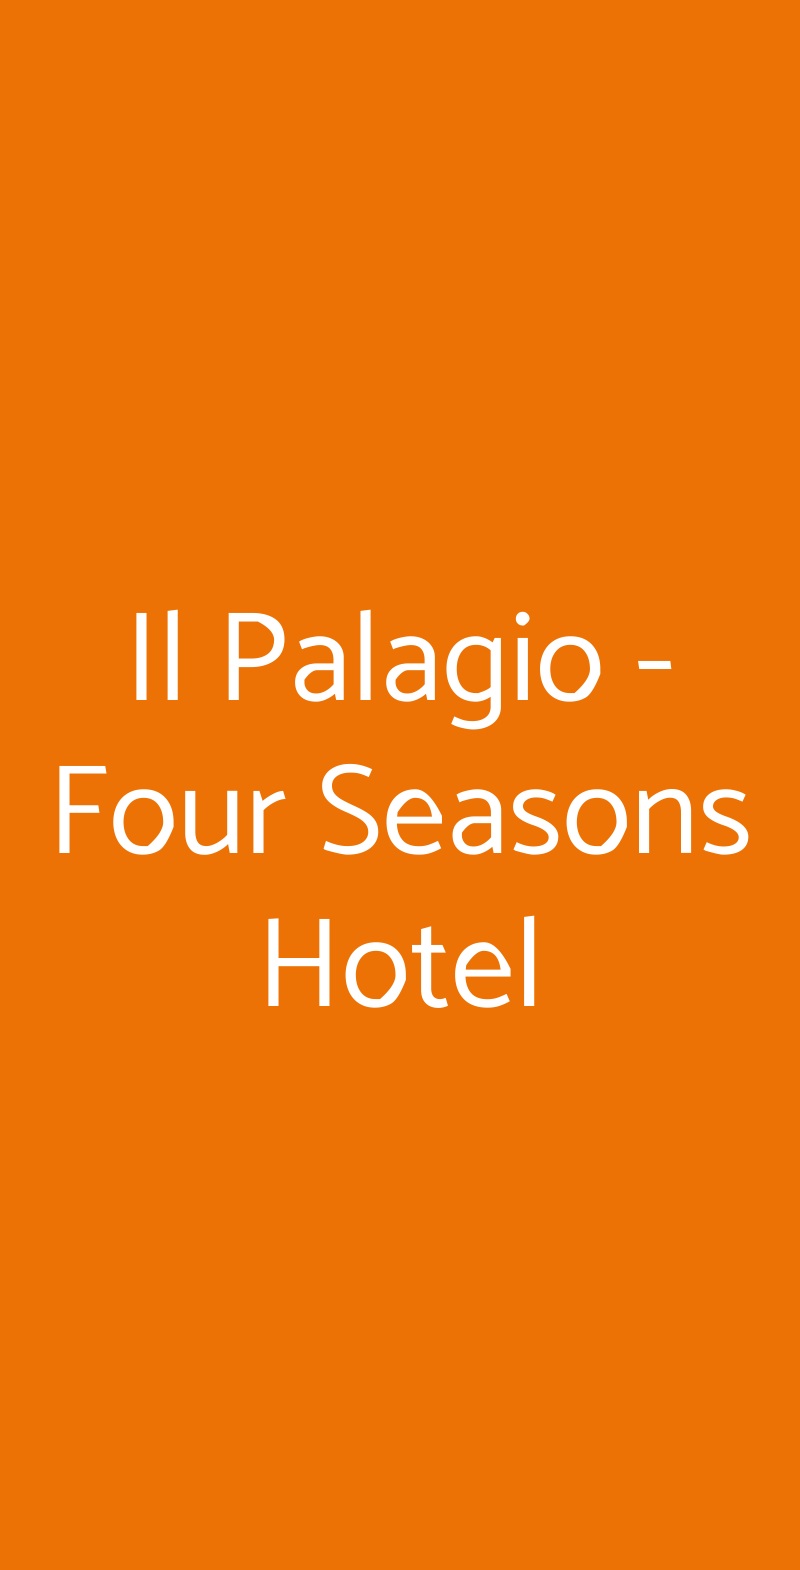 Il Palagio - Four Seasons Hotel Firenze menù 1 pagina